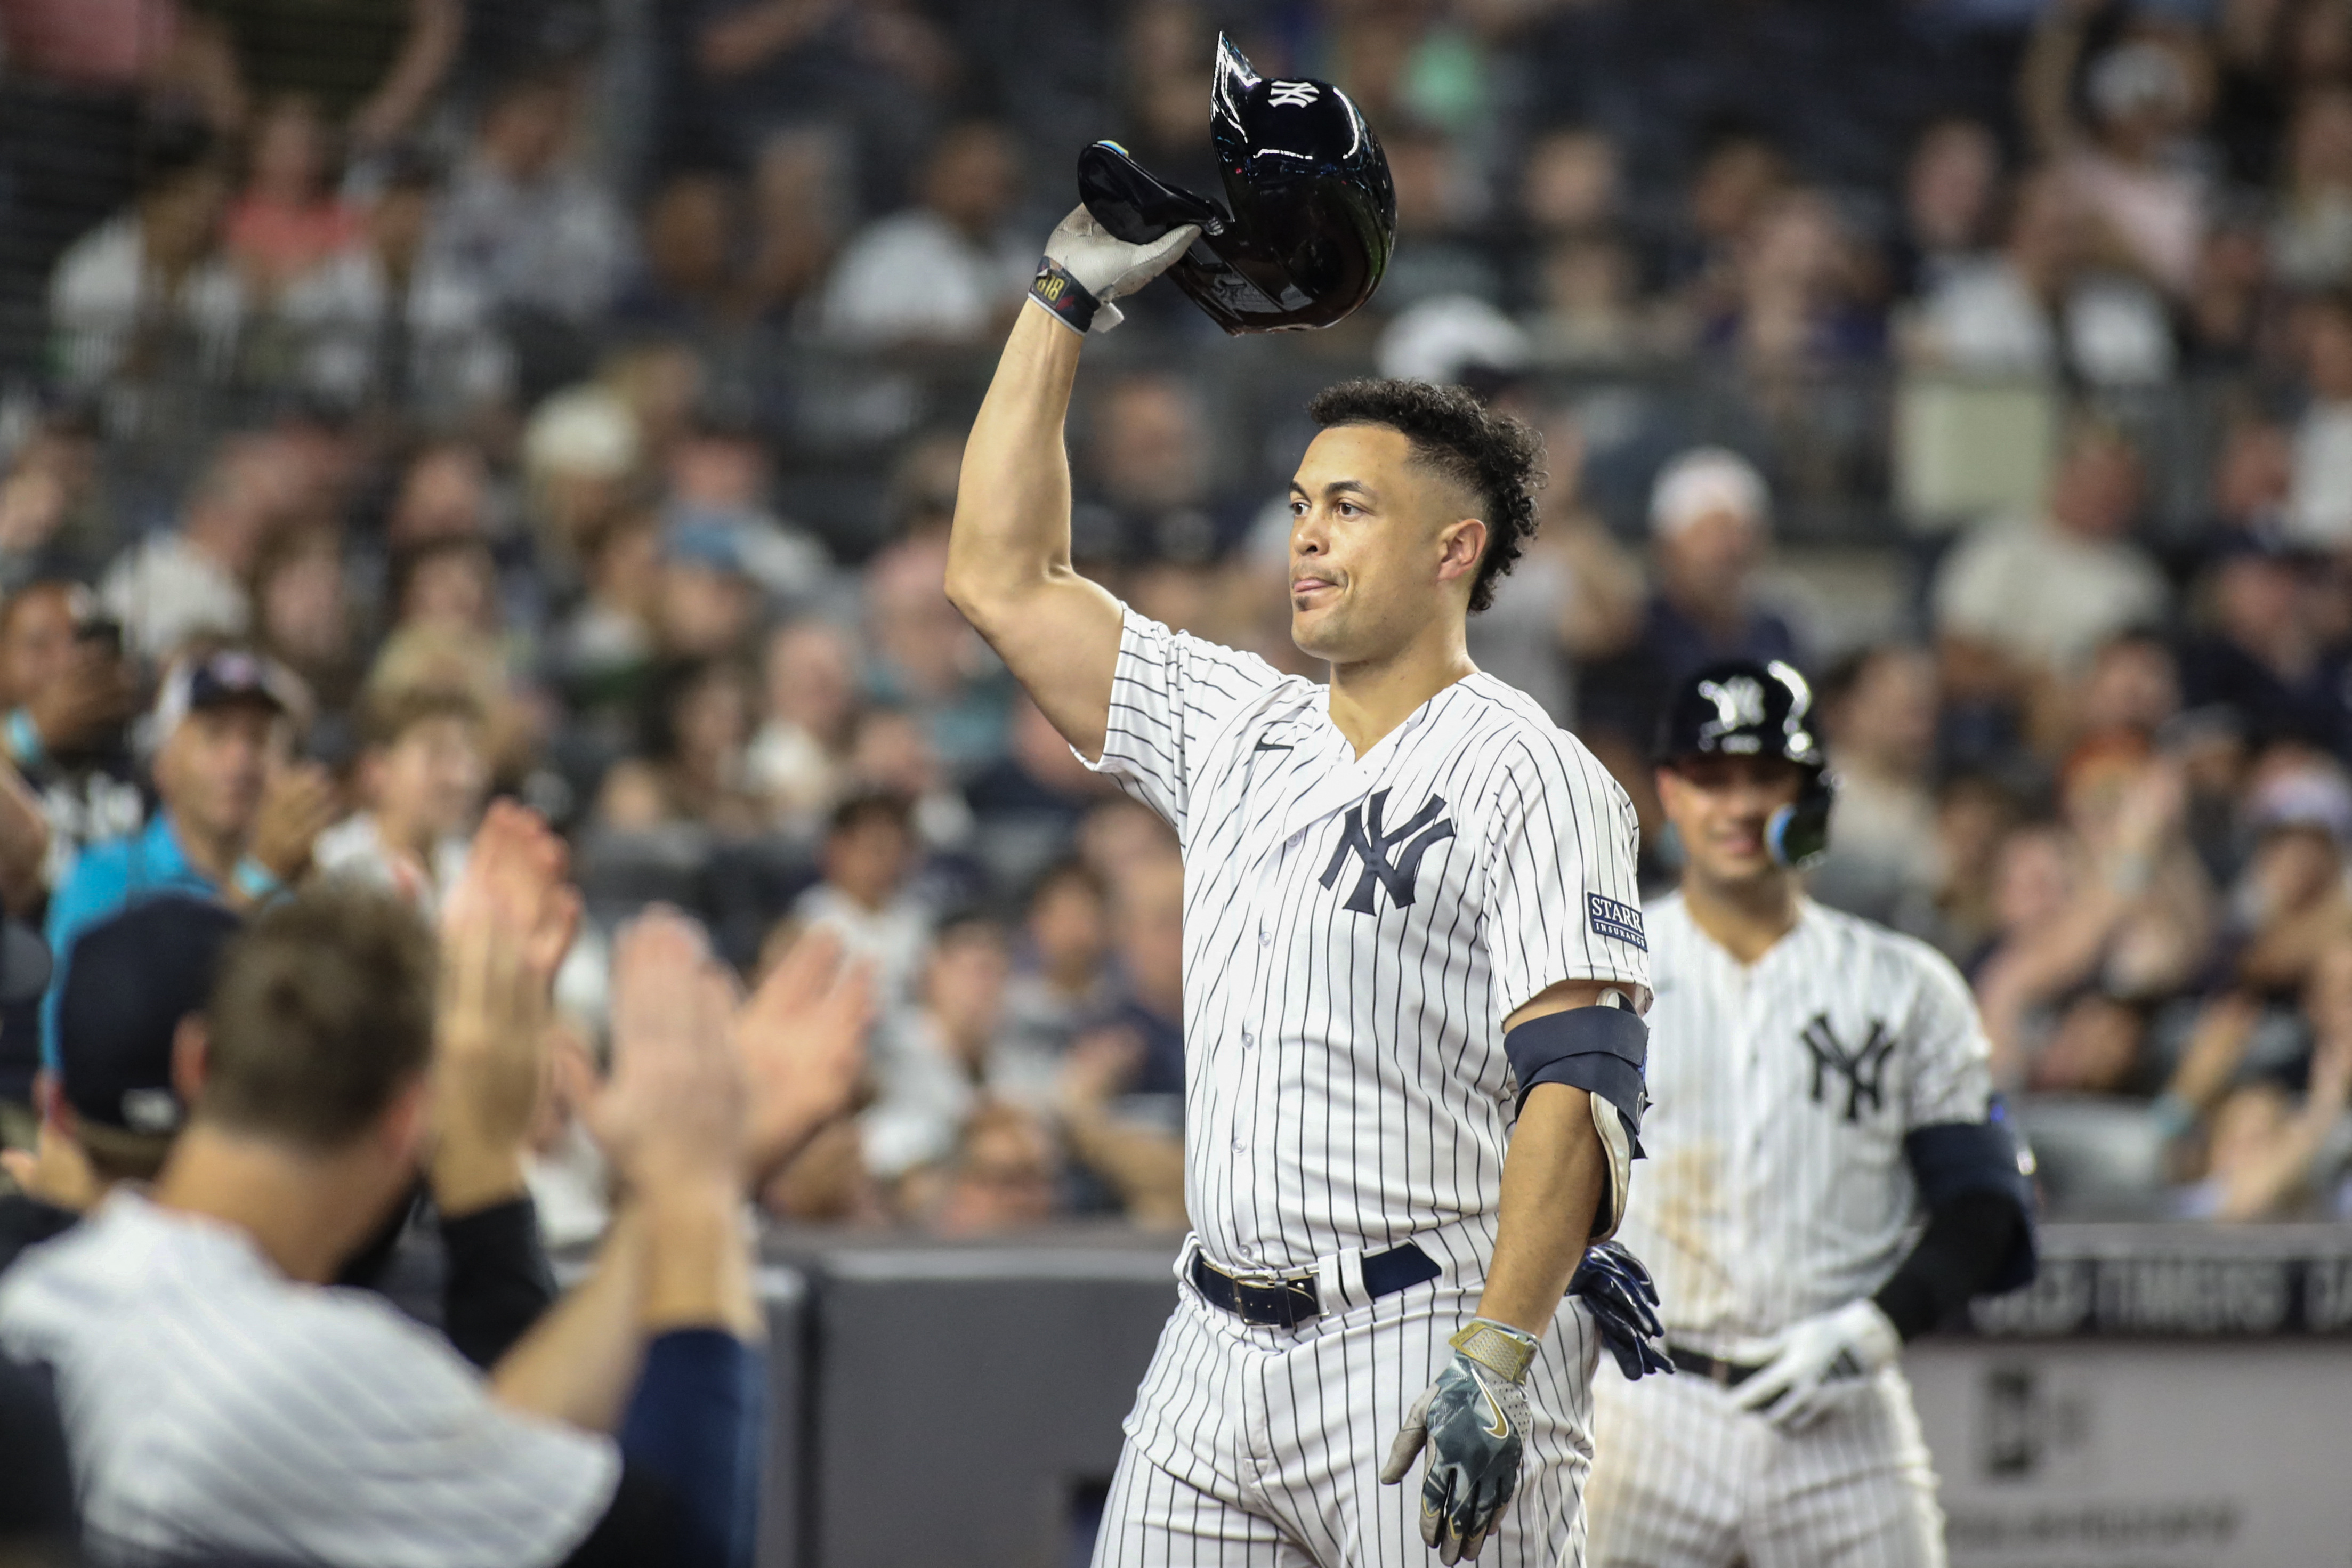 Giancarlo Stanton Blasts 2 Home Runs in Yankees' Opener - The New